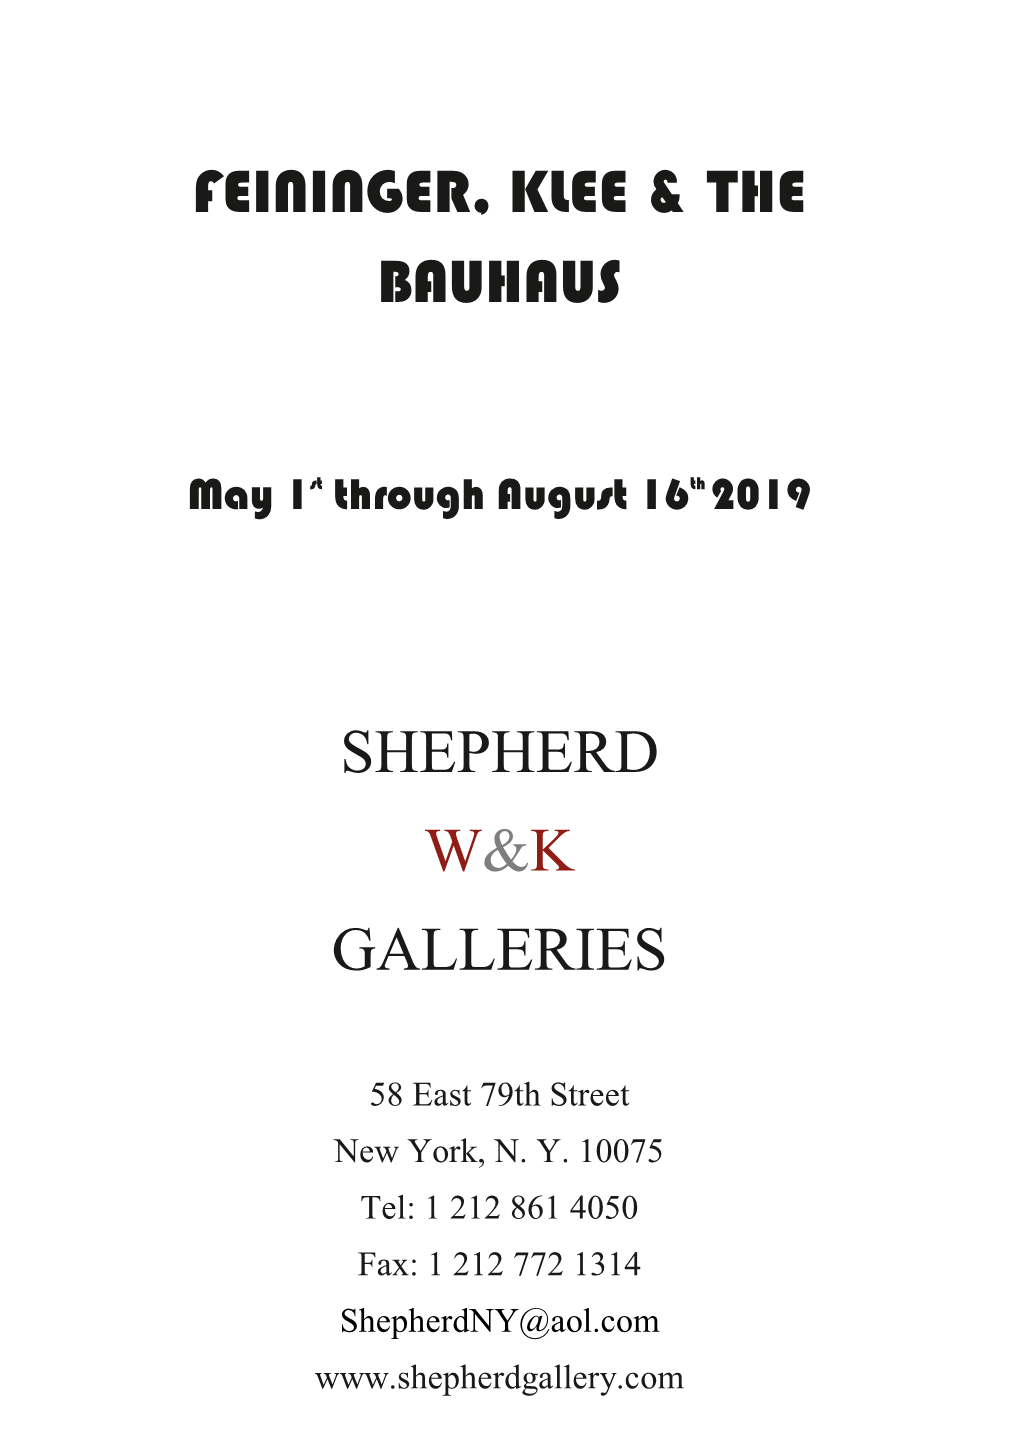 Feininger, Klee & the Bauhaus Shepherd W&K Galleries